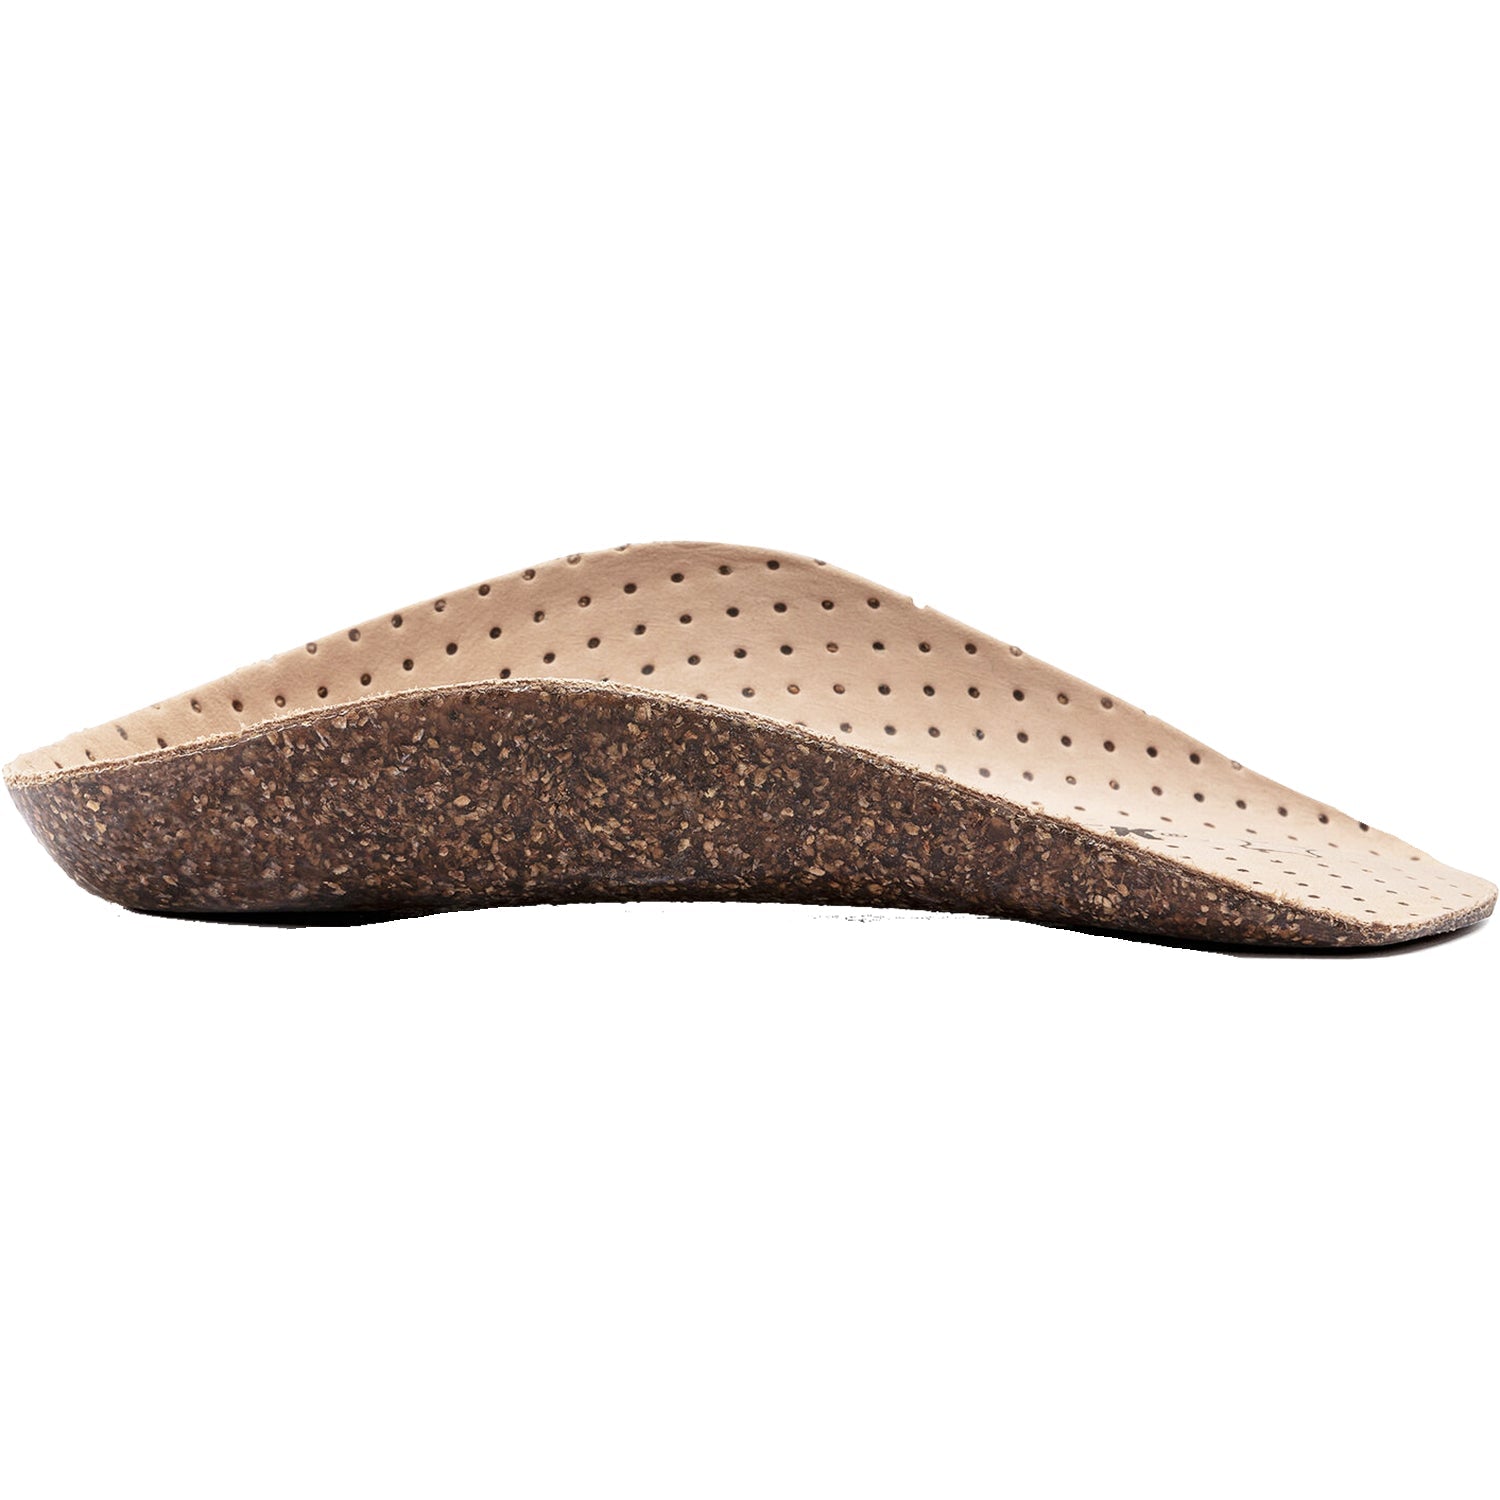 | – Arch Birkenstock Insoles Support Natural Balance Footwear Birko